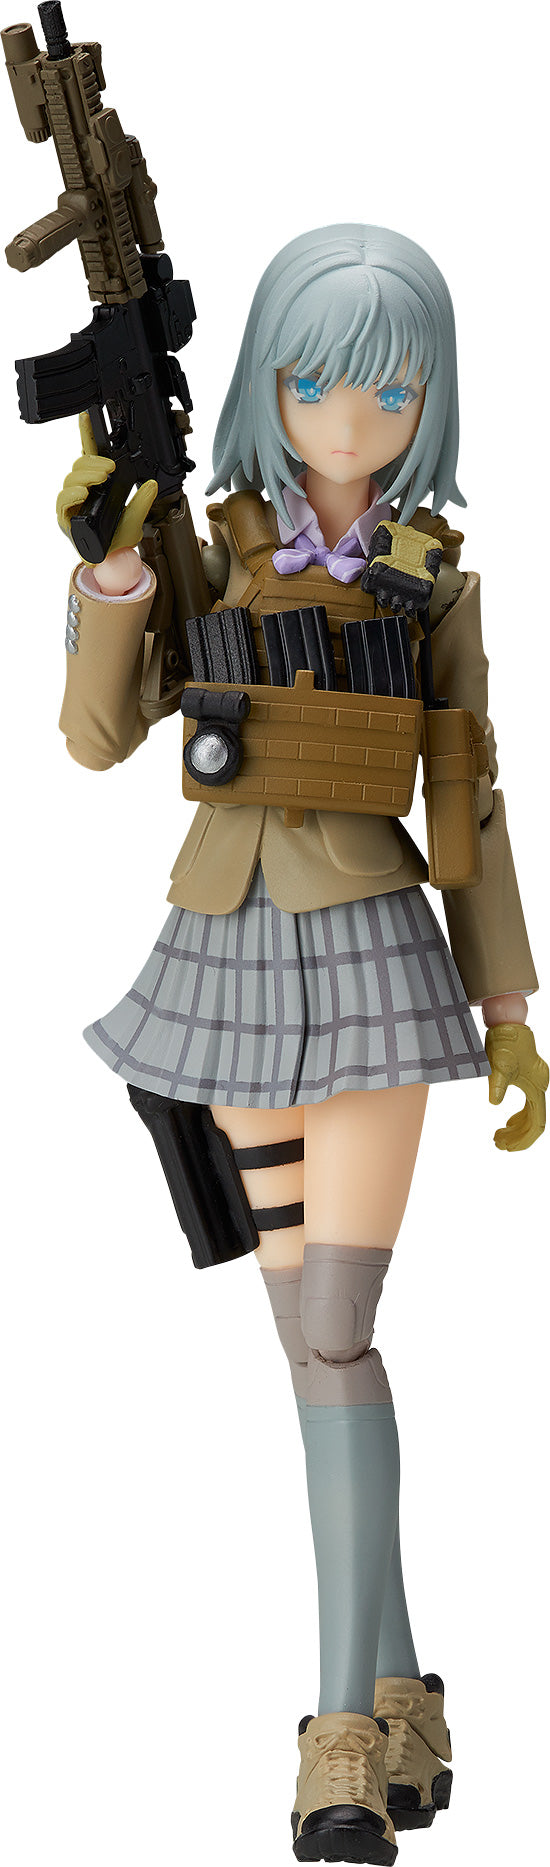 SP-098 Little Armory figma Rikka Shiina: Summer Uniform ver. (Re-sale)